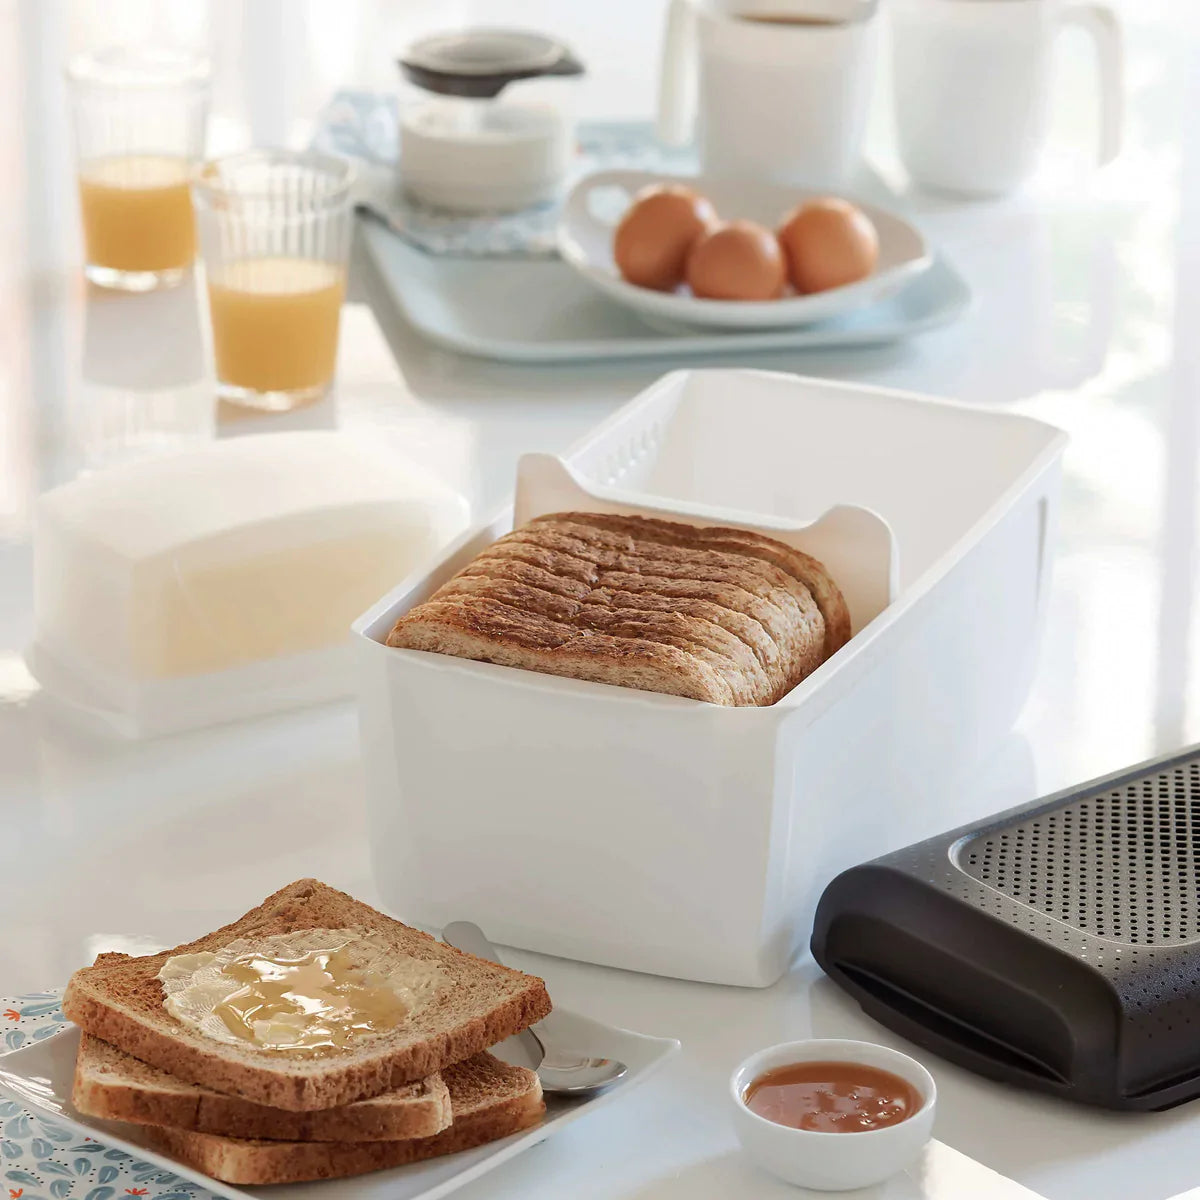 KitchenKraftz Bread Box – Fresh Bread Storage Container, Plastic Sandwich Bread Dispenser, Bread Keeper Storage Container Airtight, Tupperware Bread